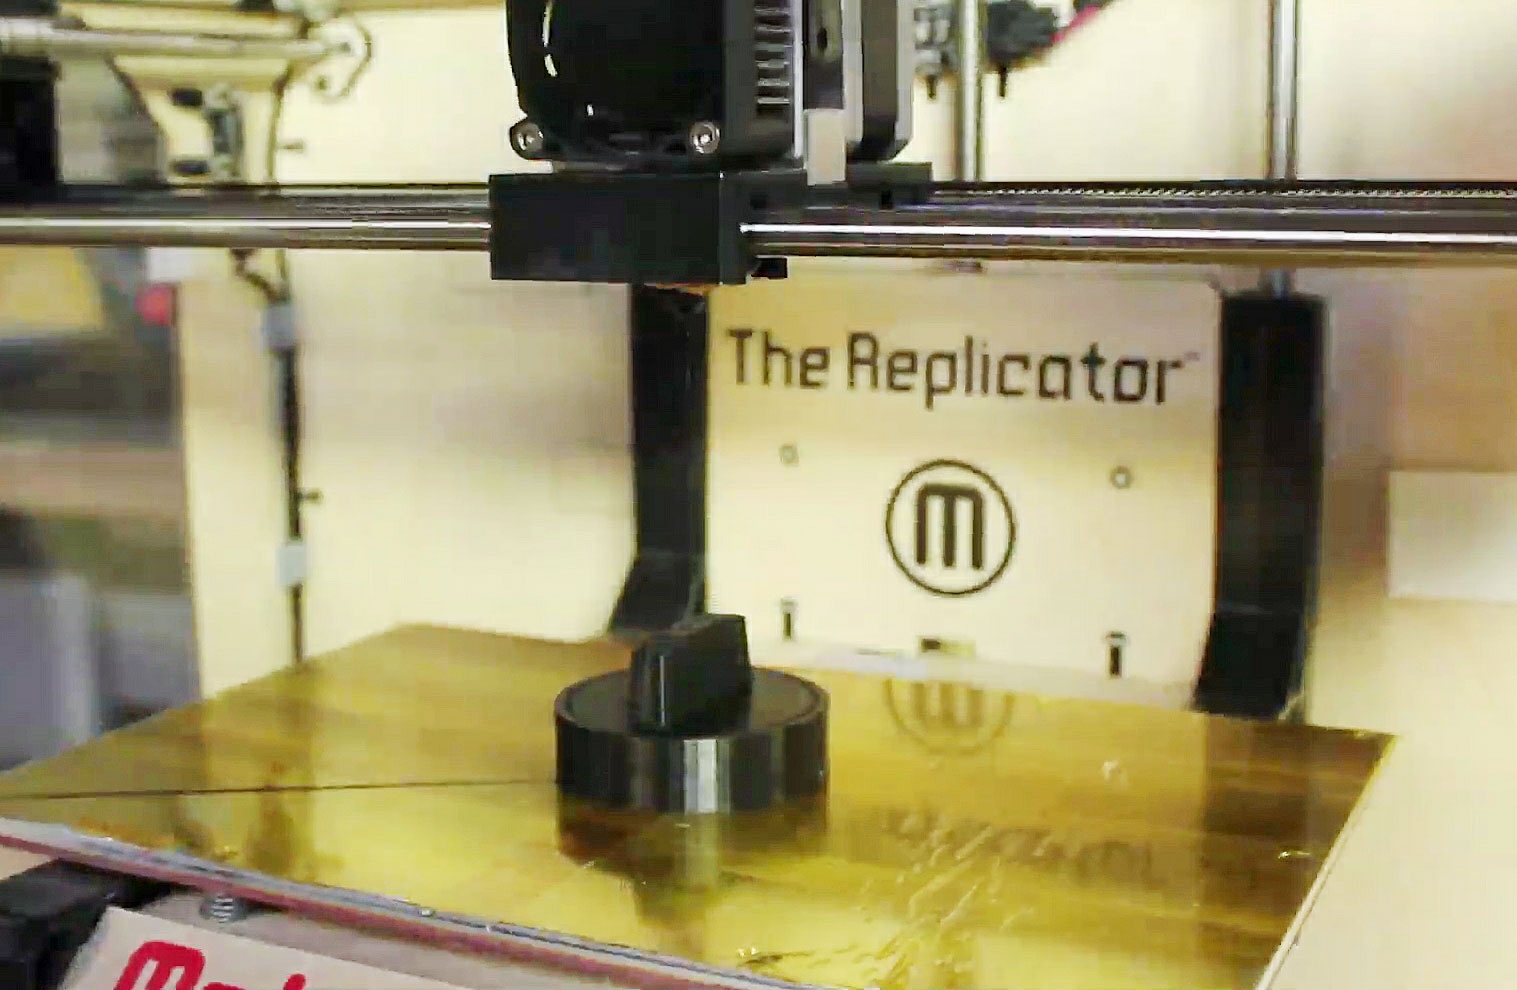 make-your-own-replacement-knob-using-a-3d-printer-ron-hazelton